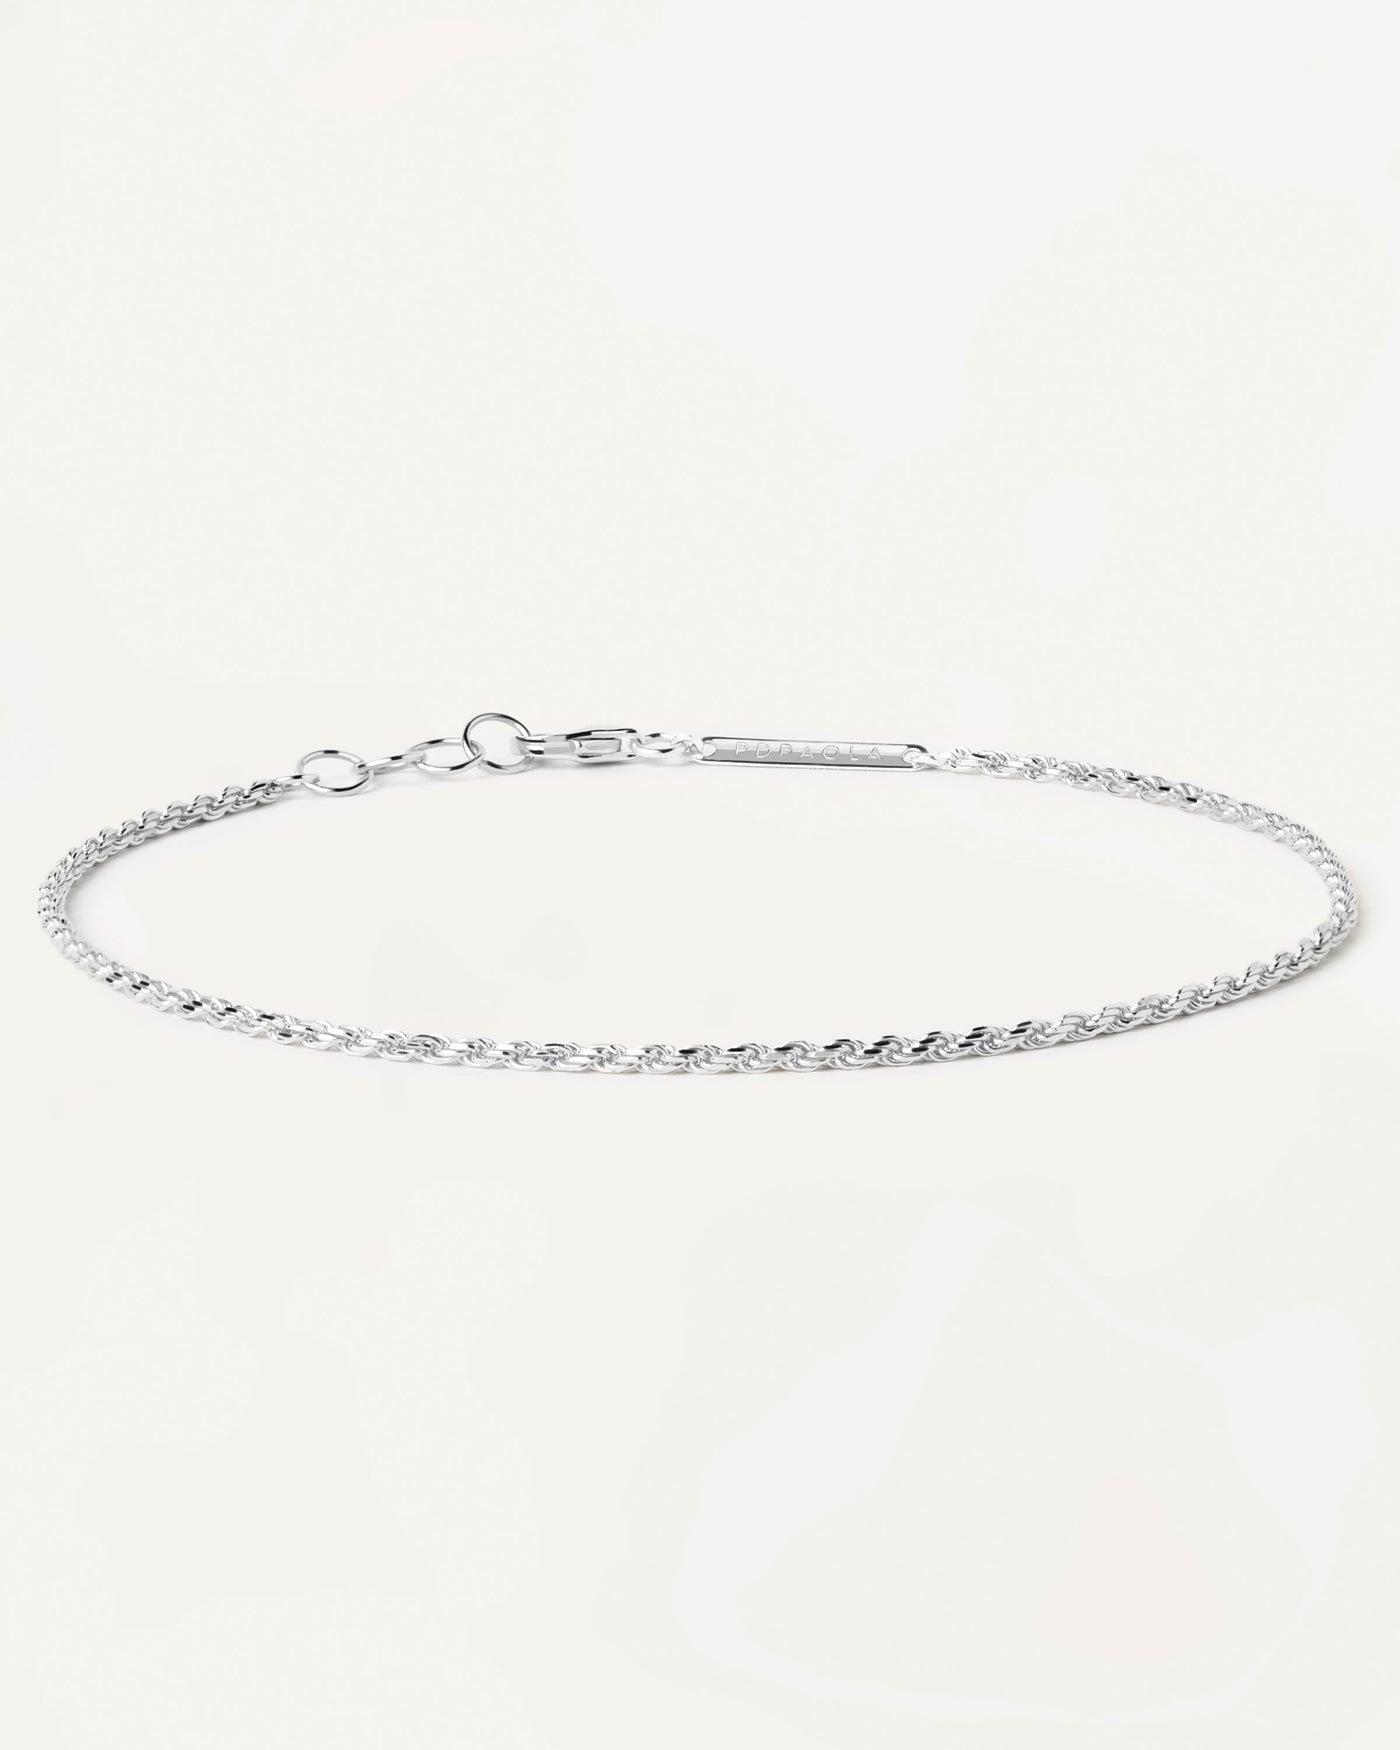 LV Volt Upside Down Chain Bracelet, White Gold And Diamonds - Jewelry -  Categories | LOUIS VUITTON ®